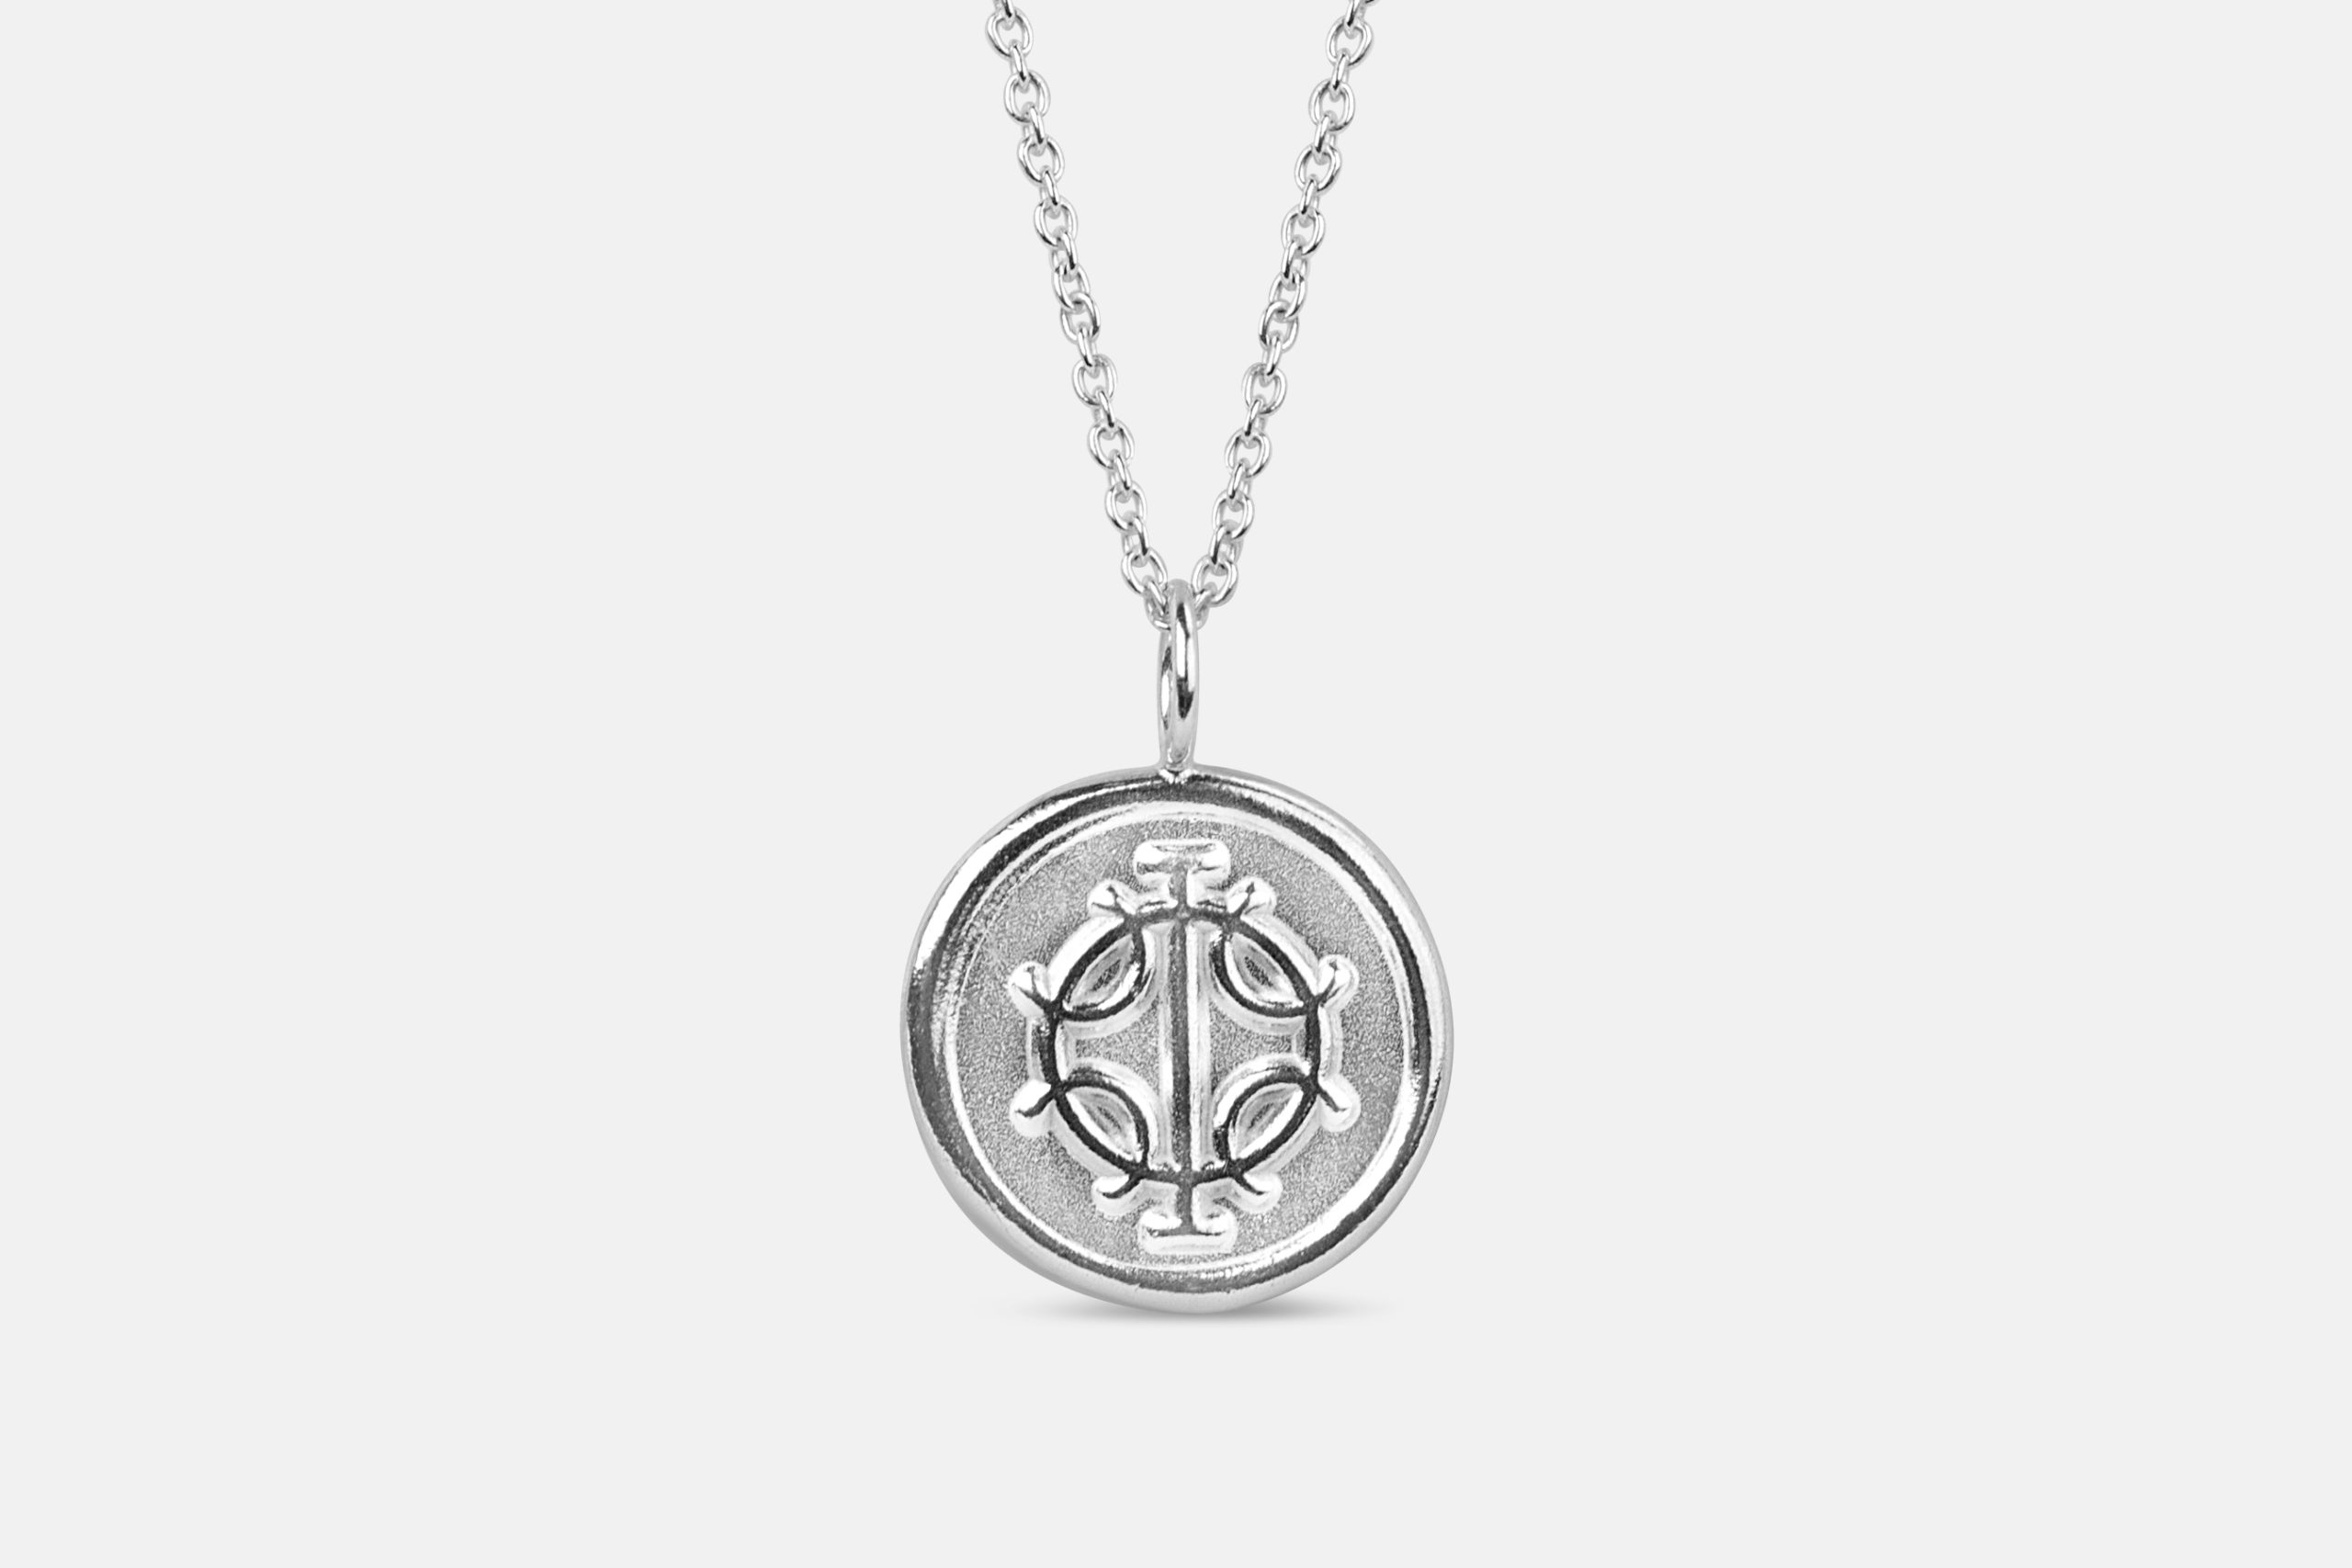 Danobus magic stave necklace in silver